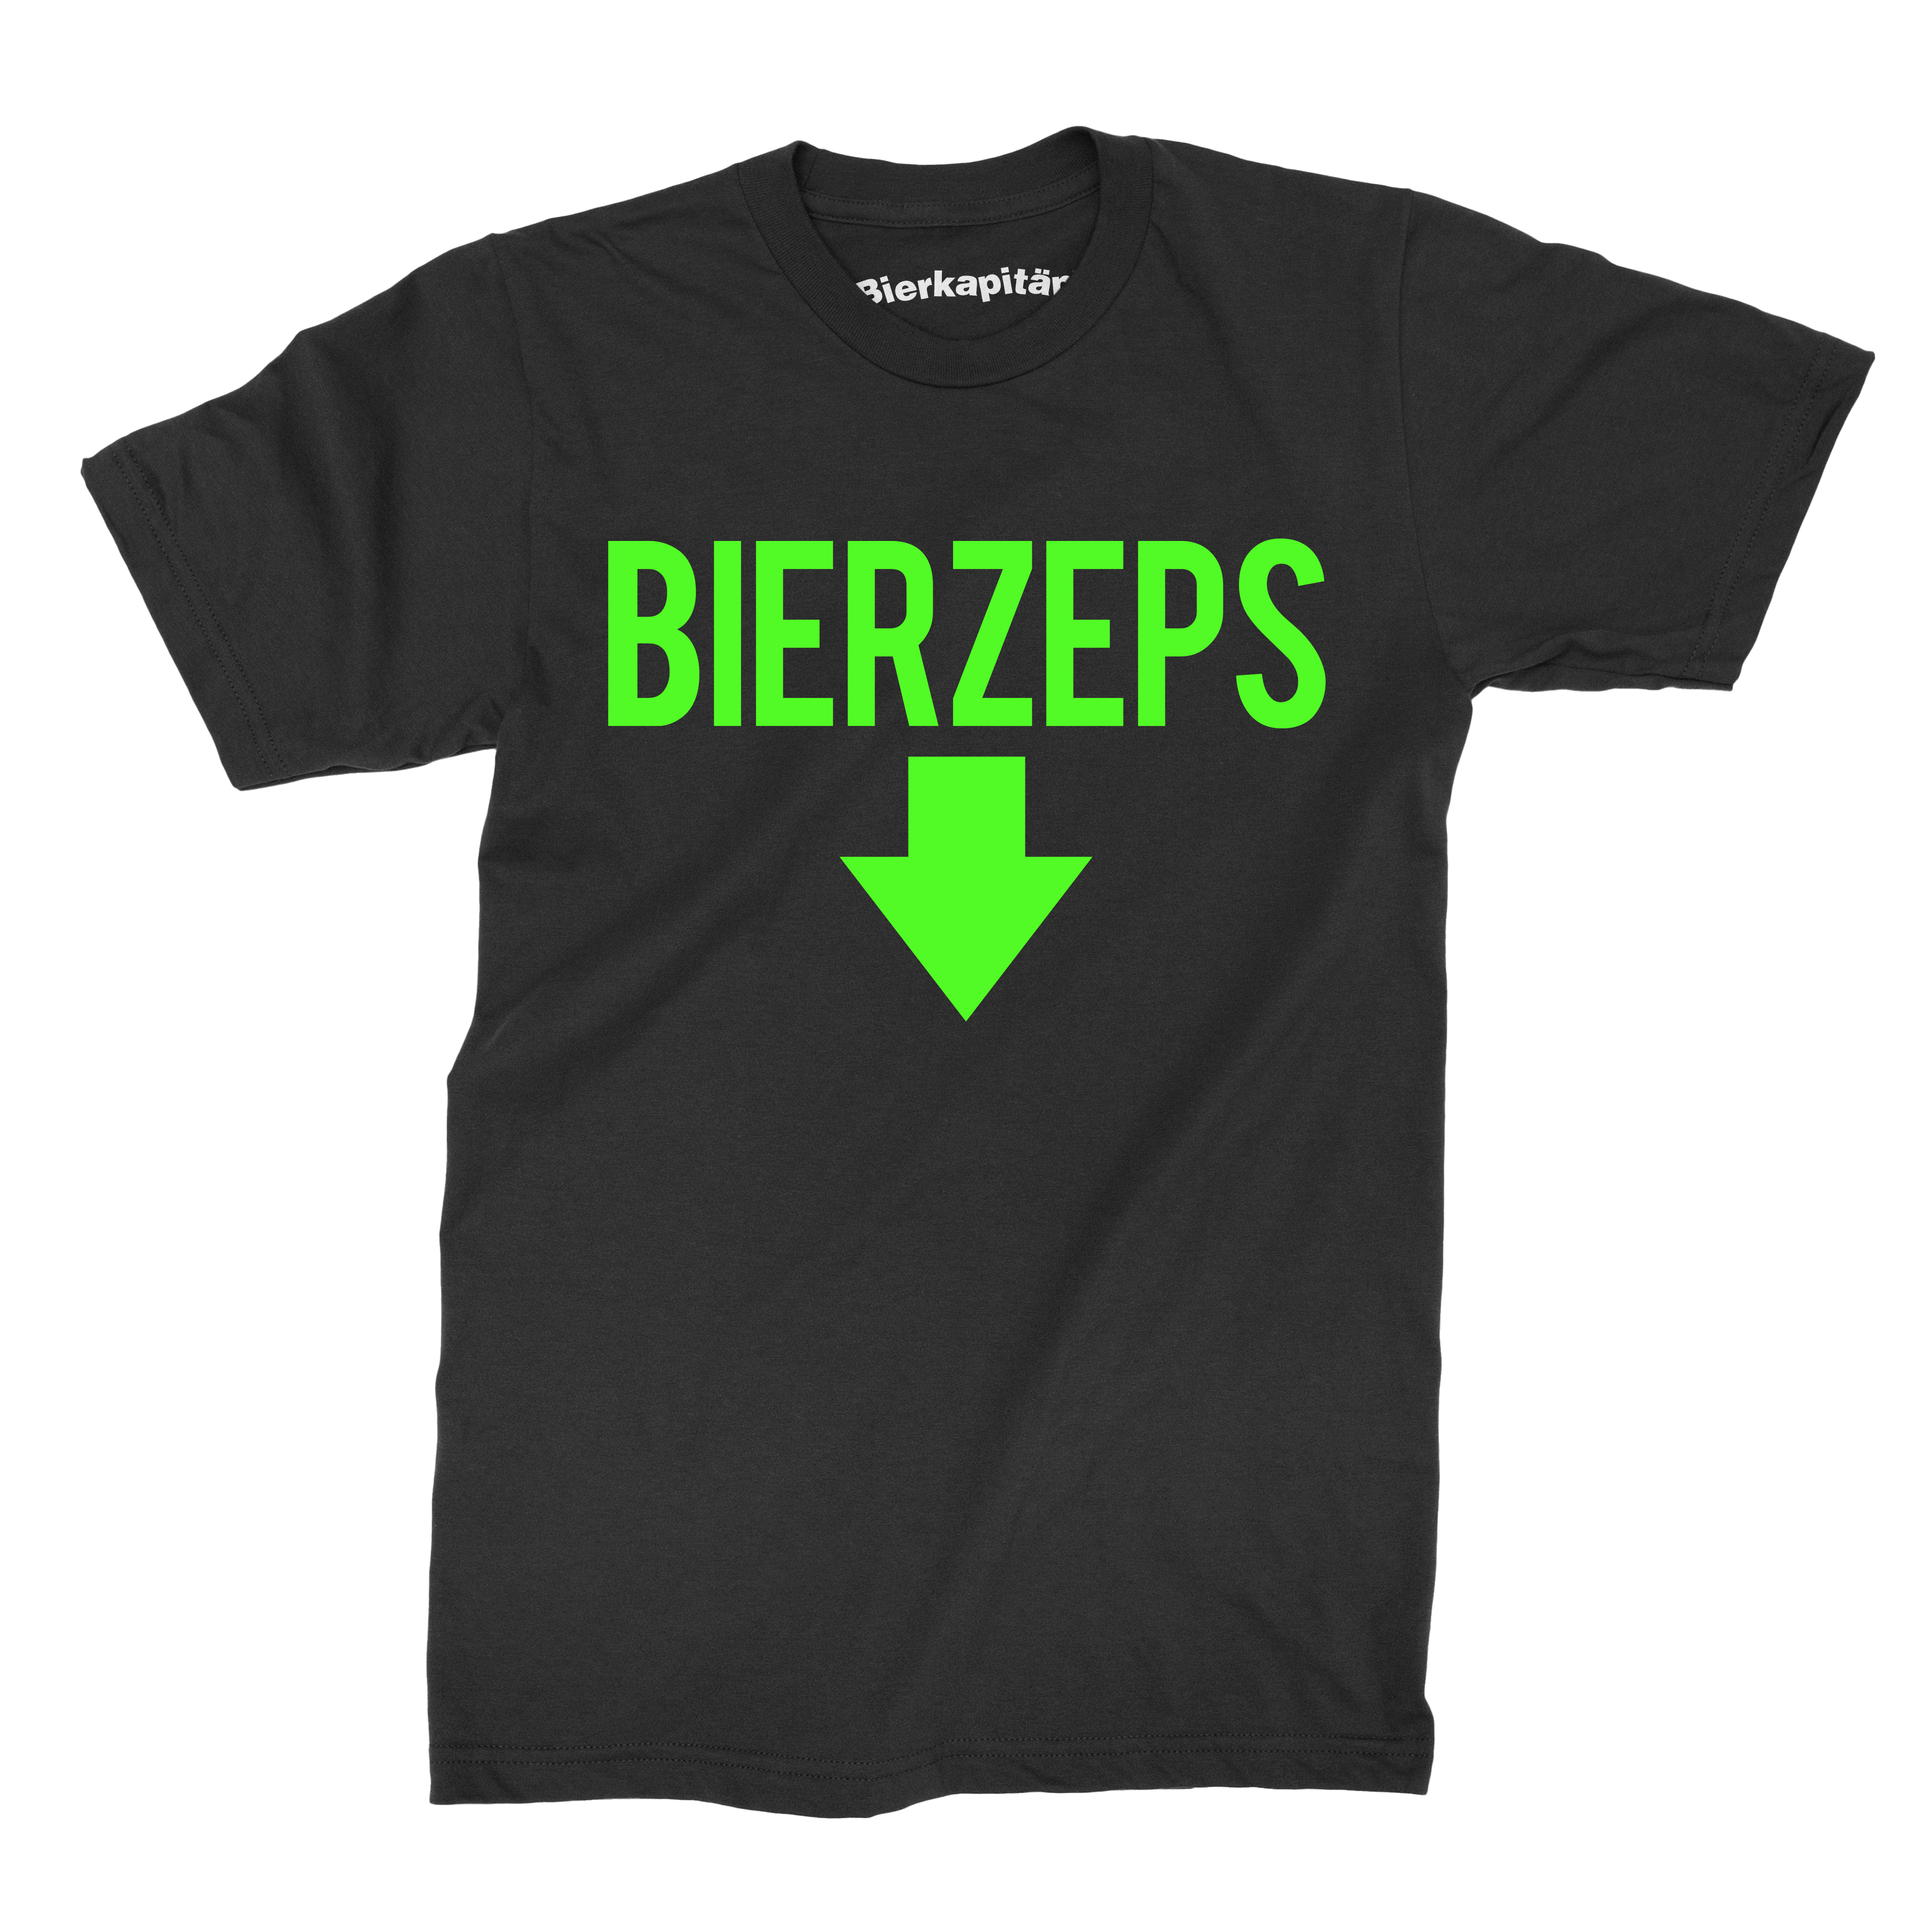 Bierkapitän - BIERZEPS T-Shirt [black]